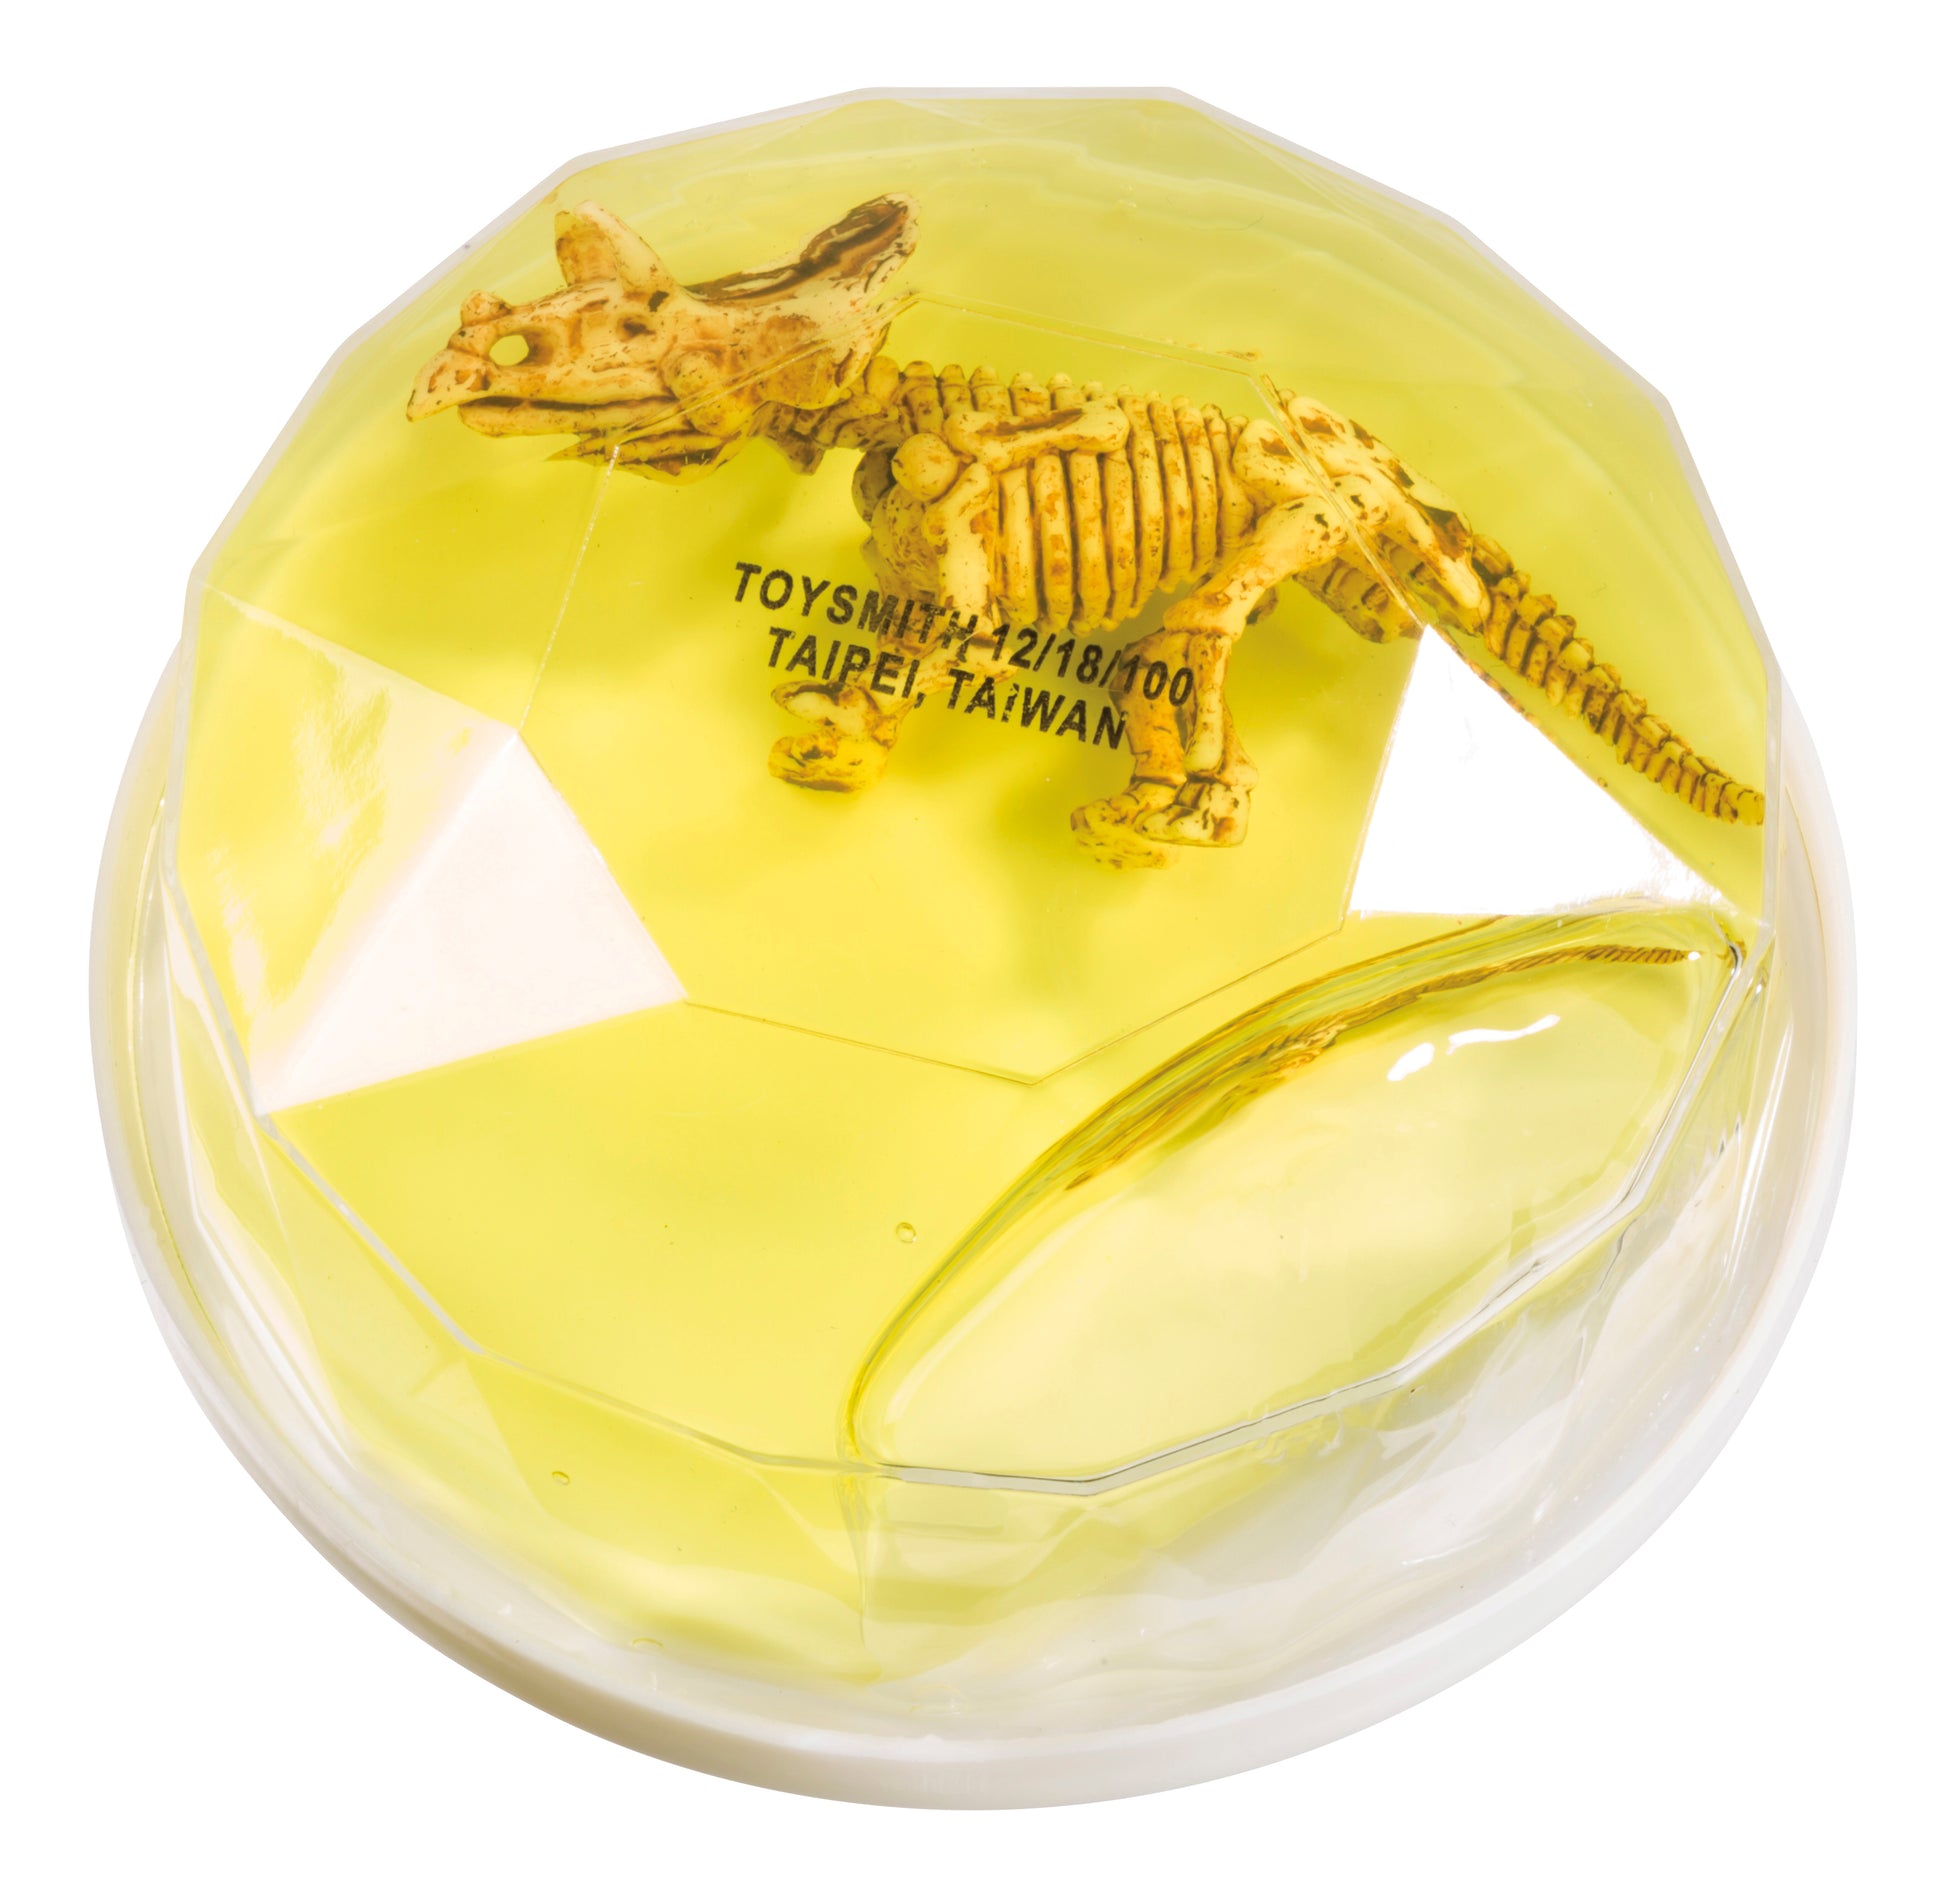 Yellow Dinosaur Putty with a dinosaur figure